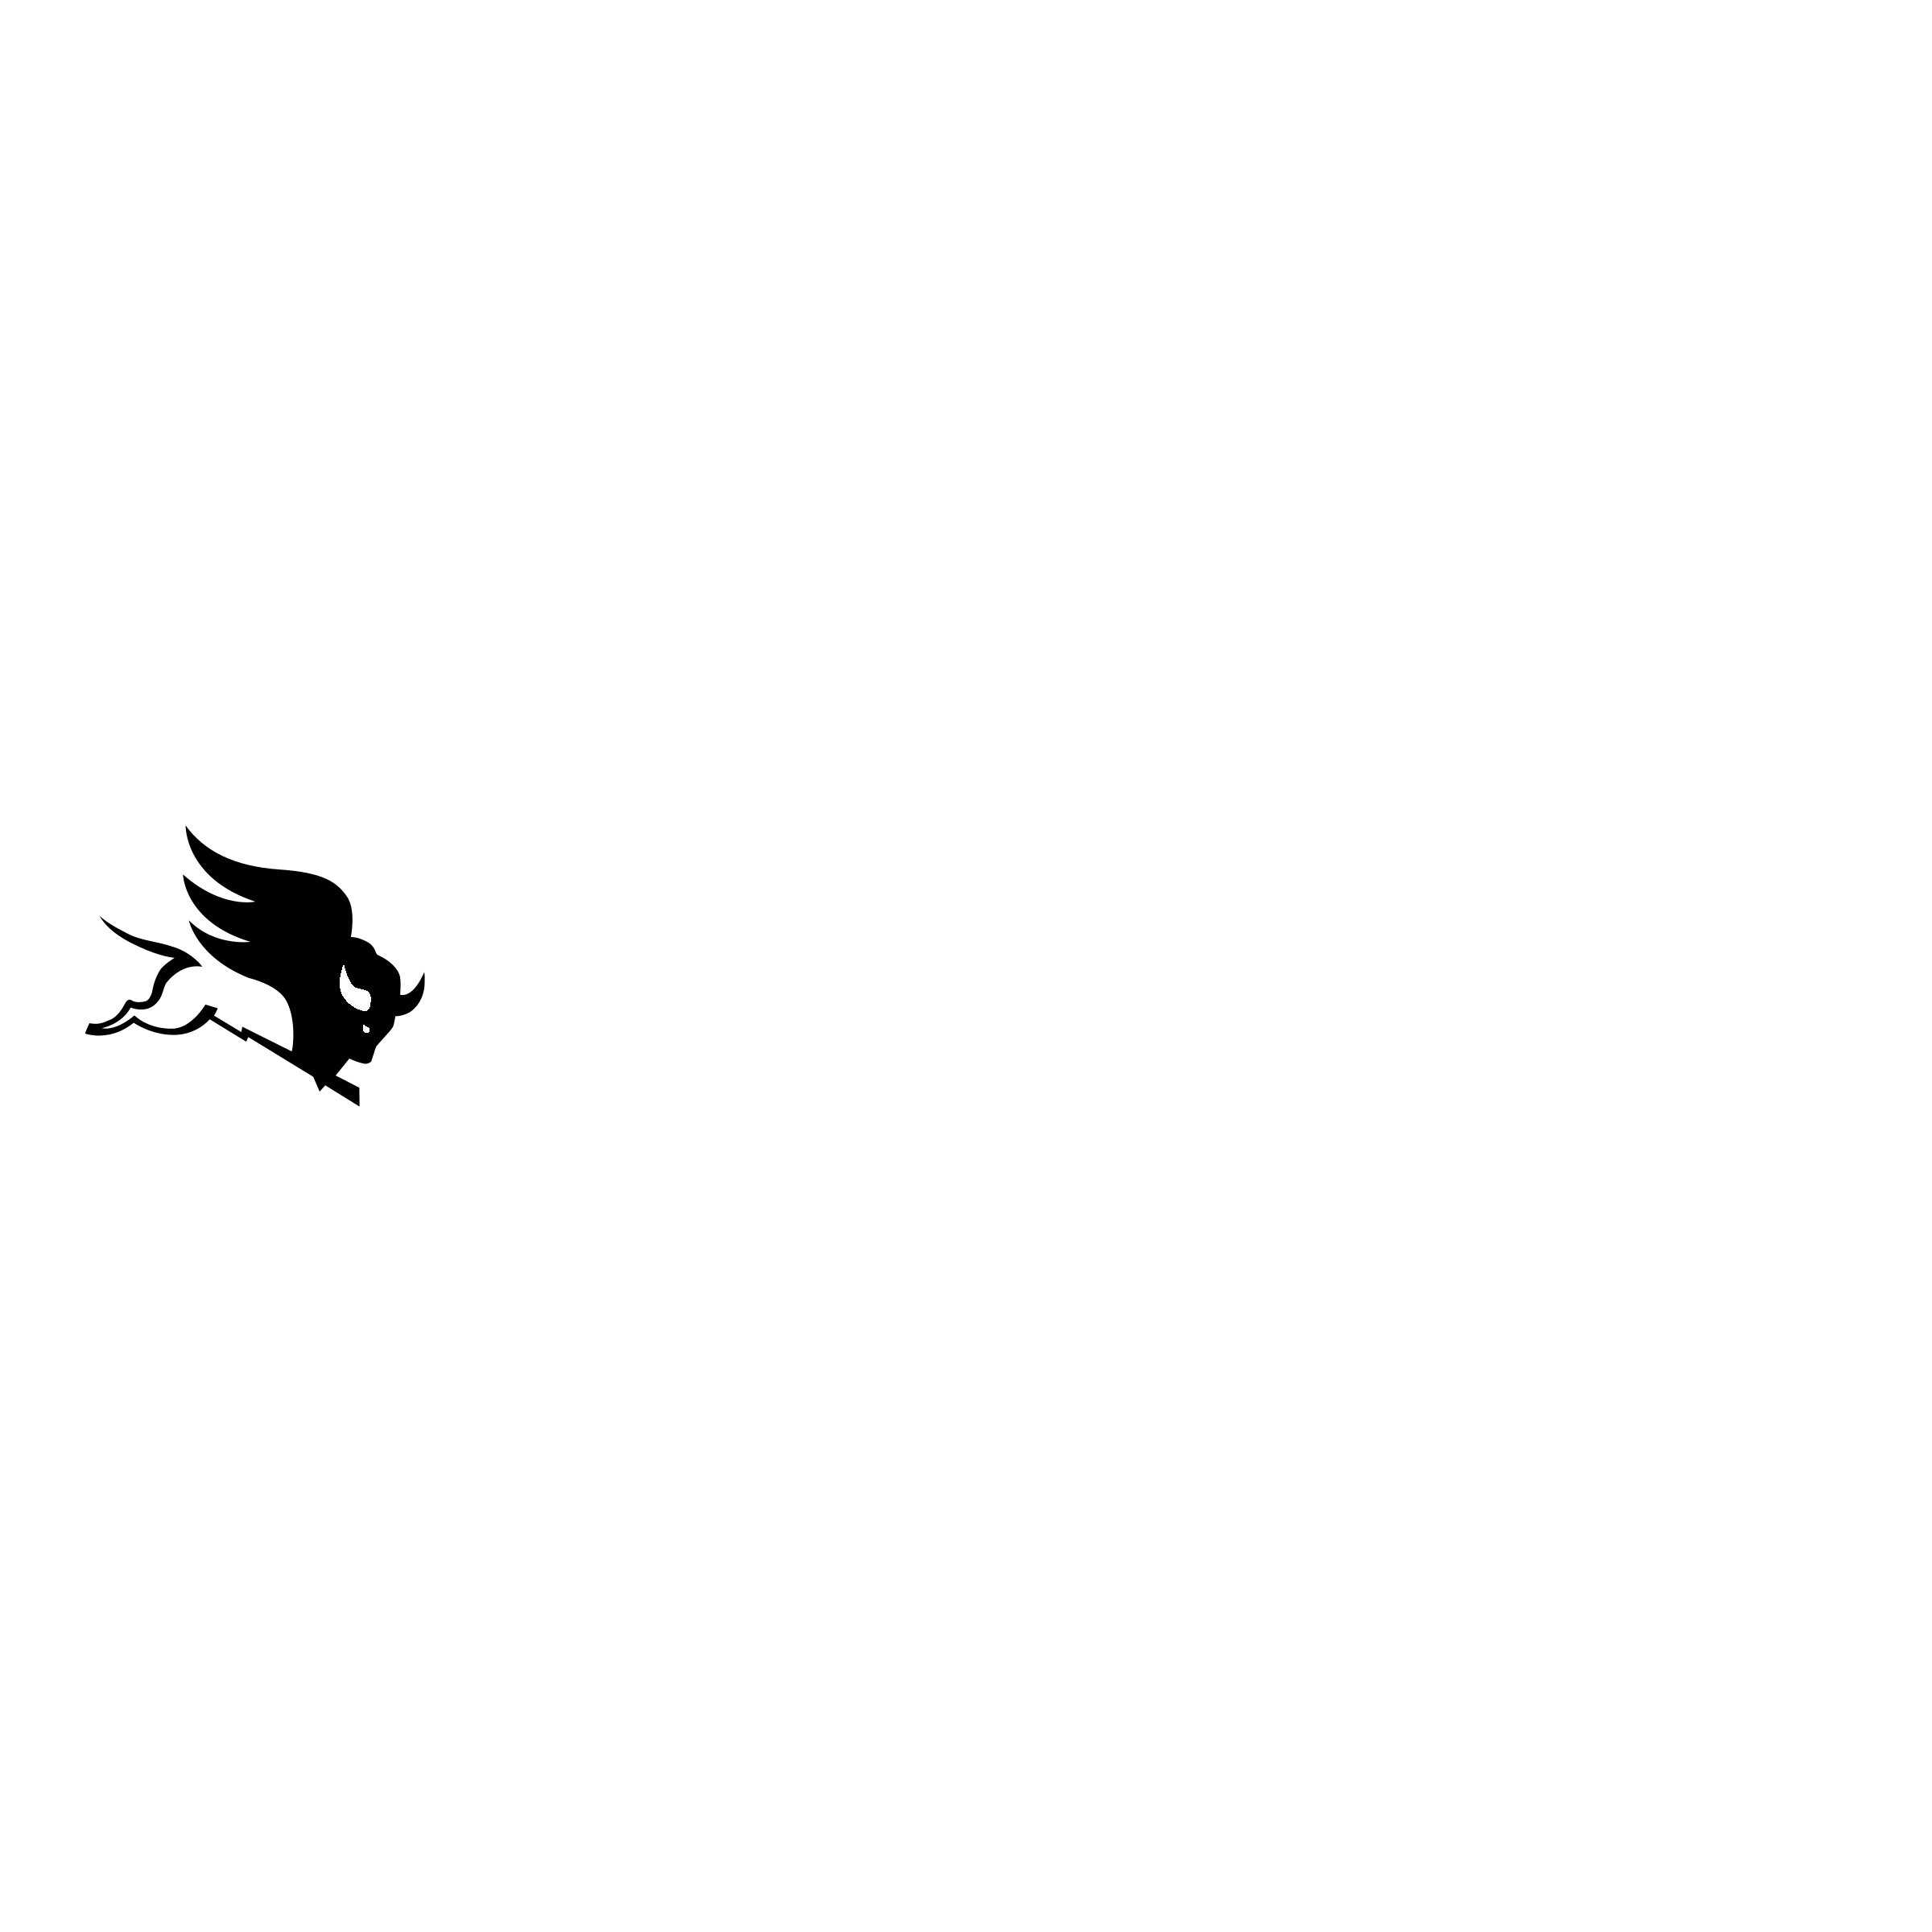 Meritor Logo - Meritor Logo PNG Transparent & SVG Vector - Freebie Supply